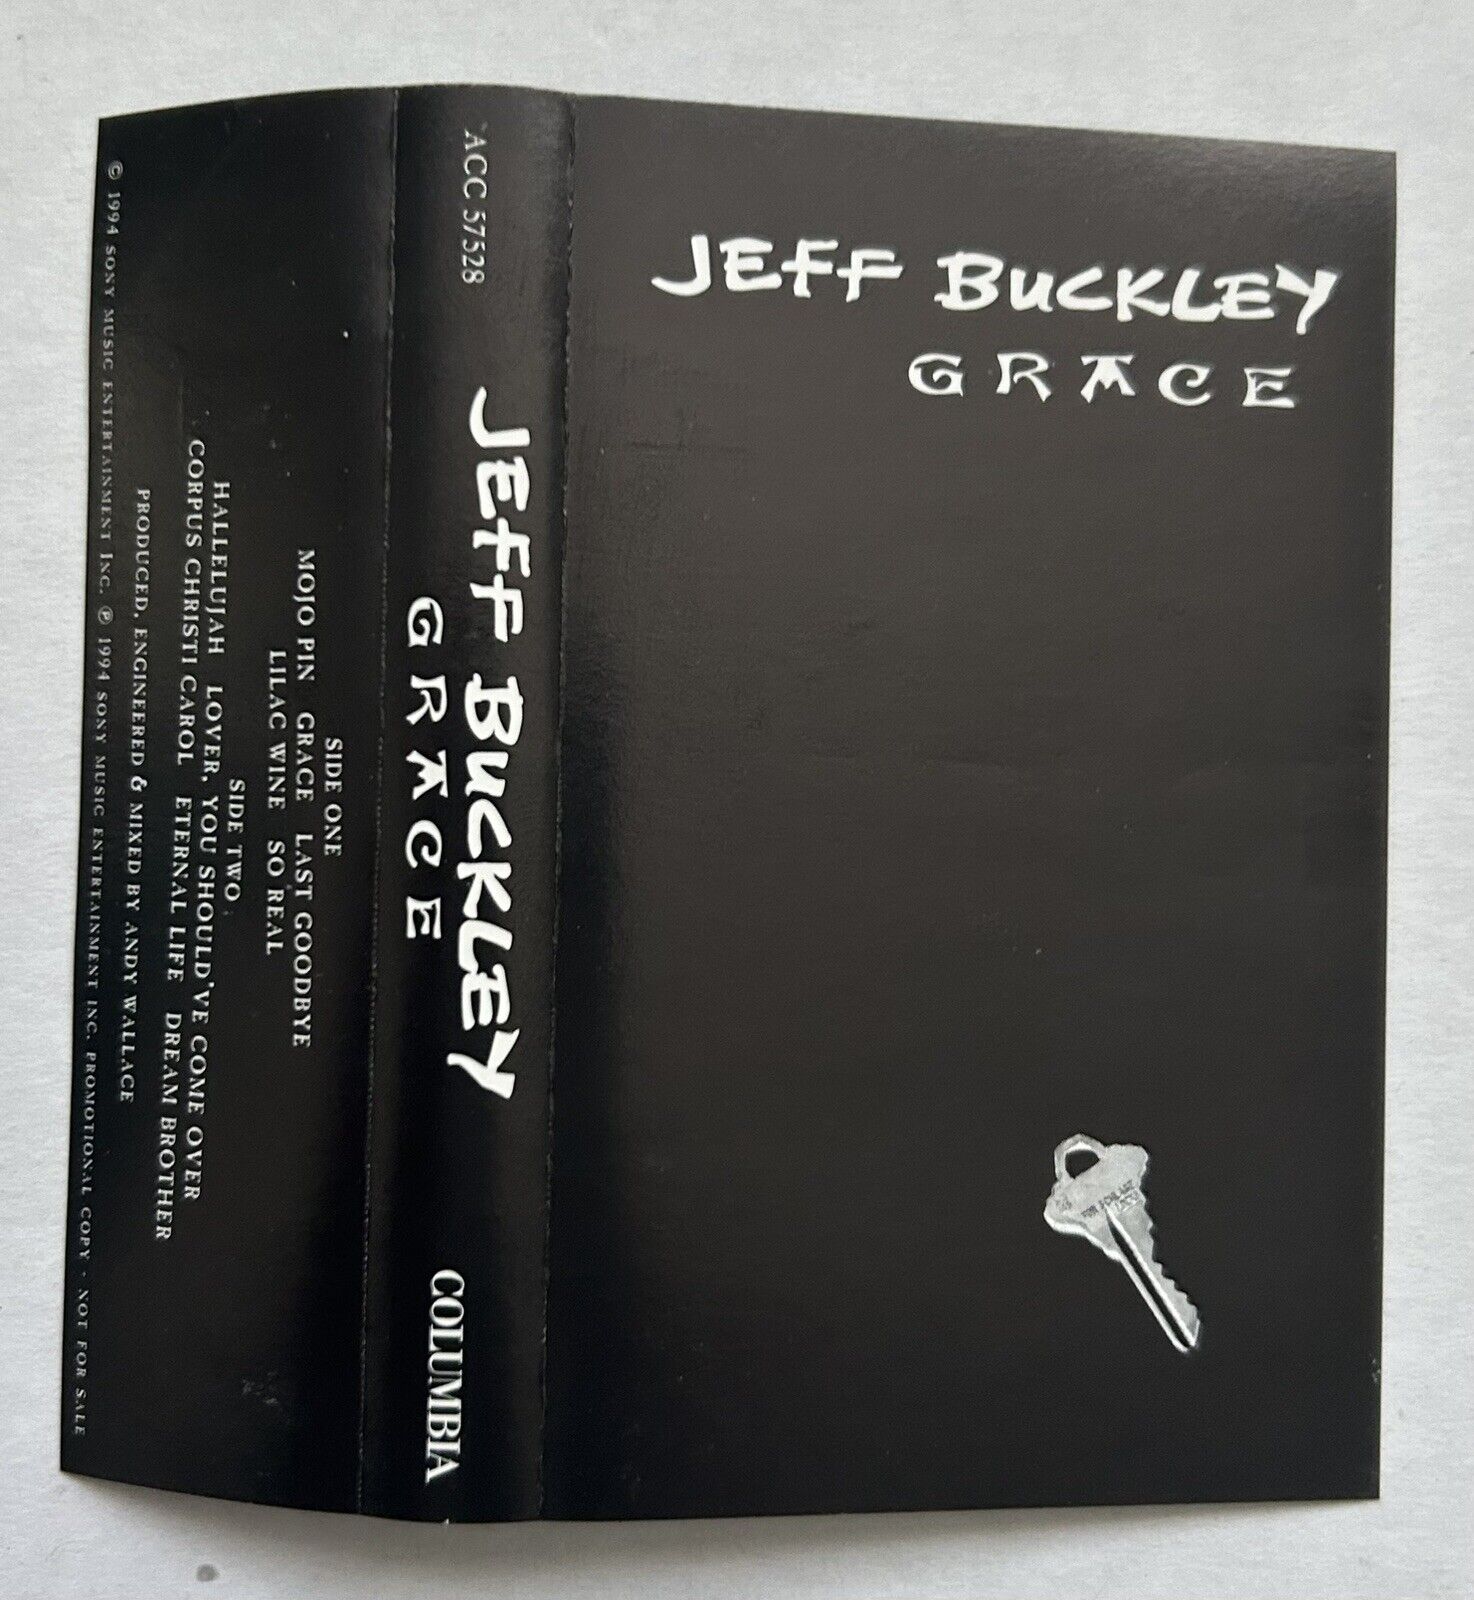 Jeff Buckley - Grace - Rare Advance Promotional Cassette Tape ACC 57528 Promo